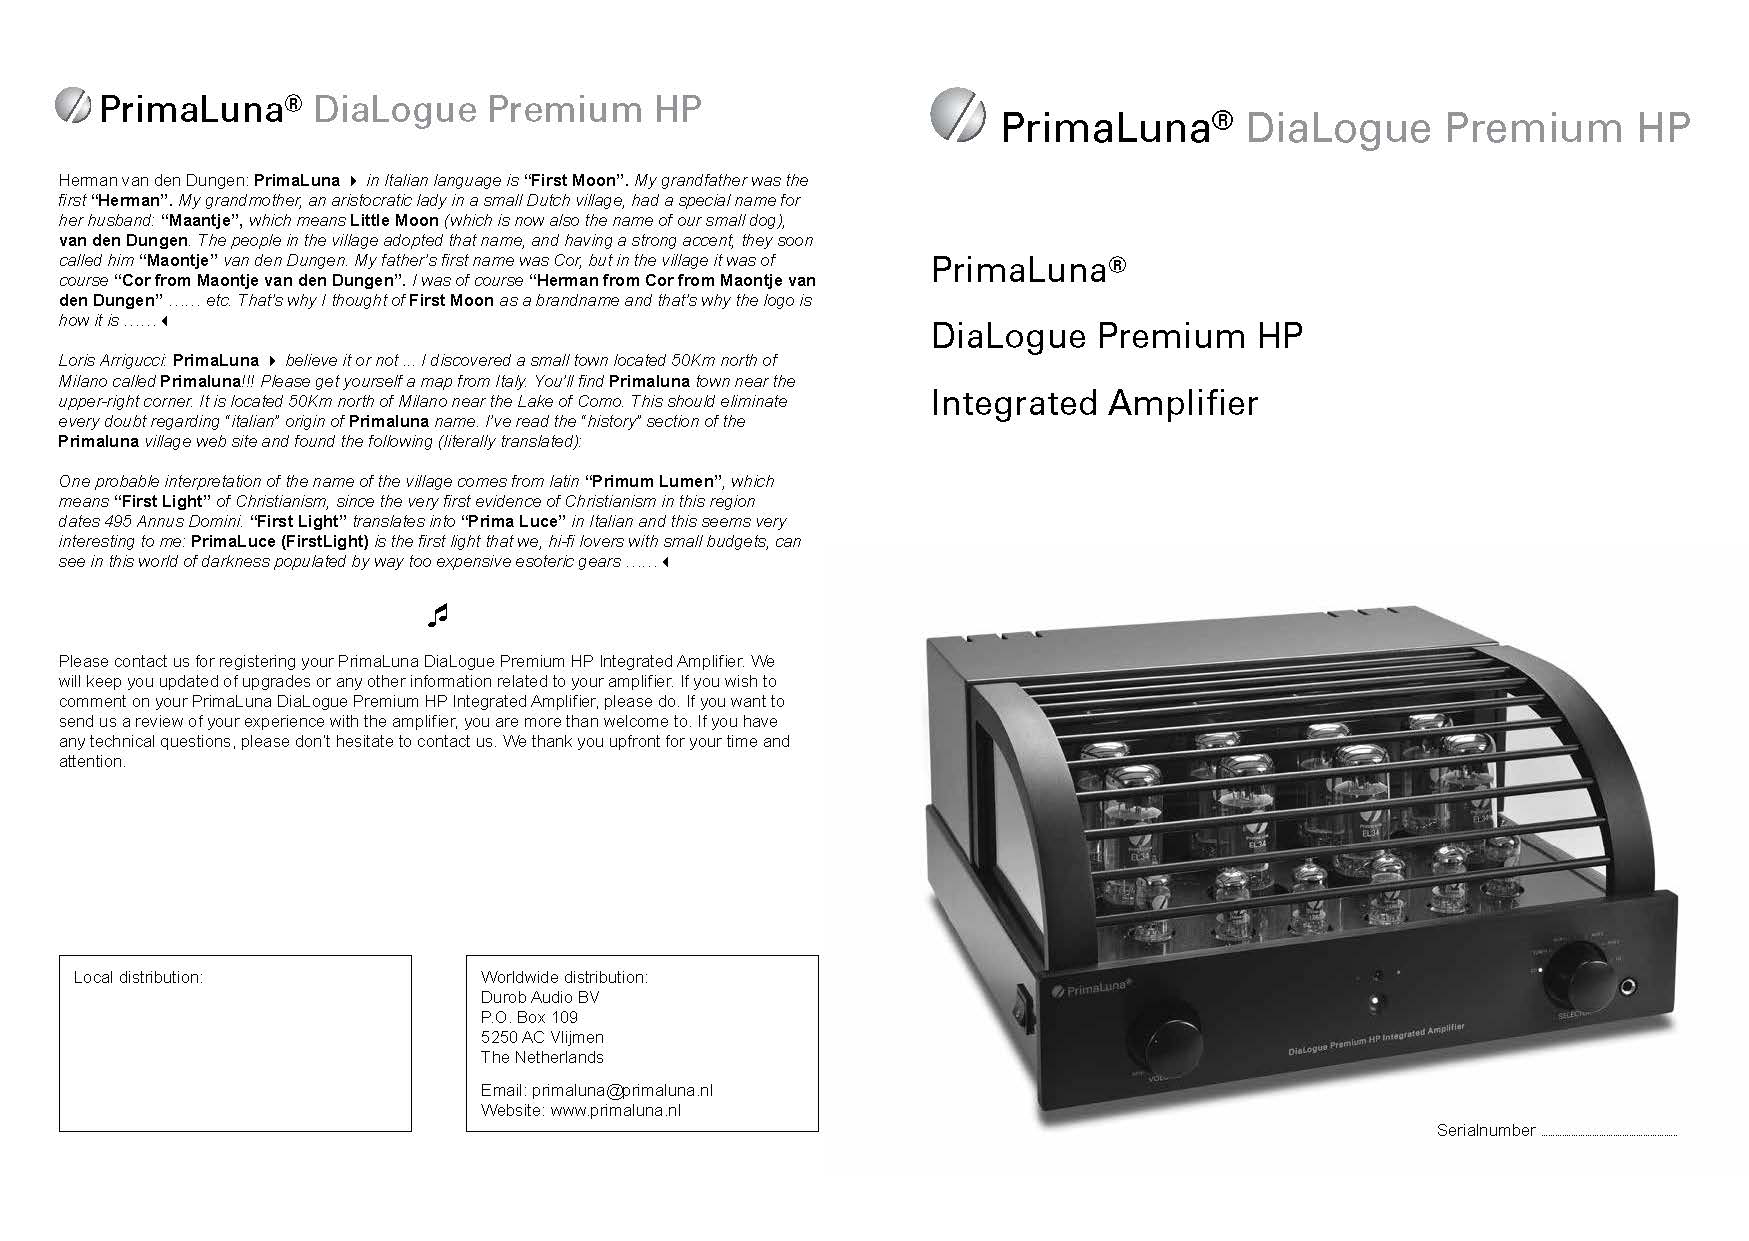 PrimaLuna DiaLogue Premium HP Integrated Amplifier User Manual - Norman Audio